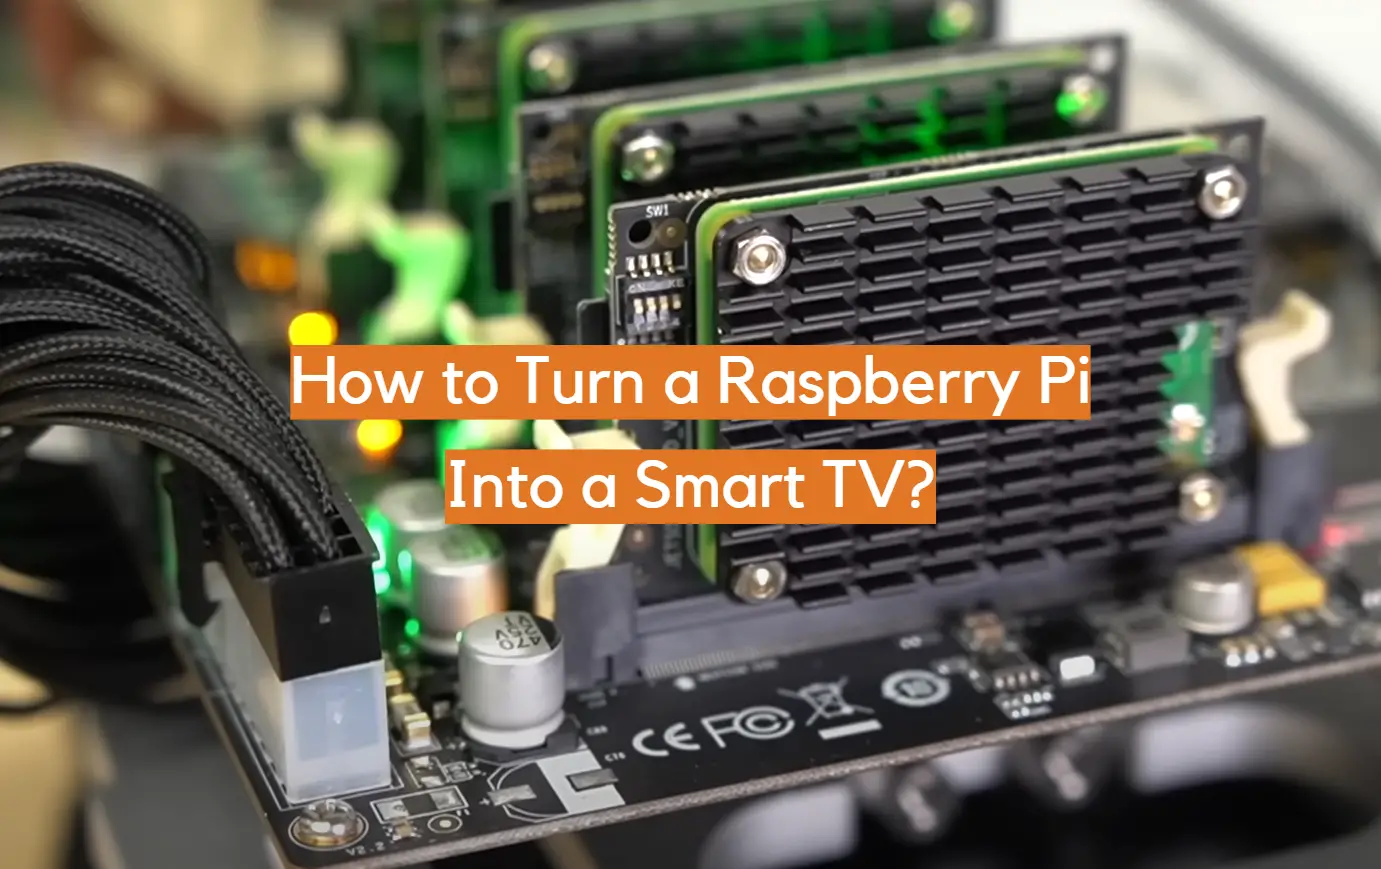 How to Turn a Raspberry Pi Into a Smart TV?